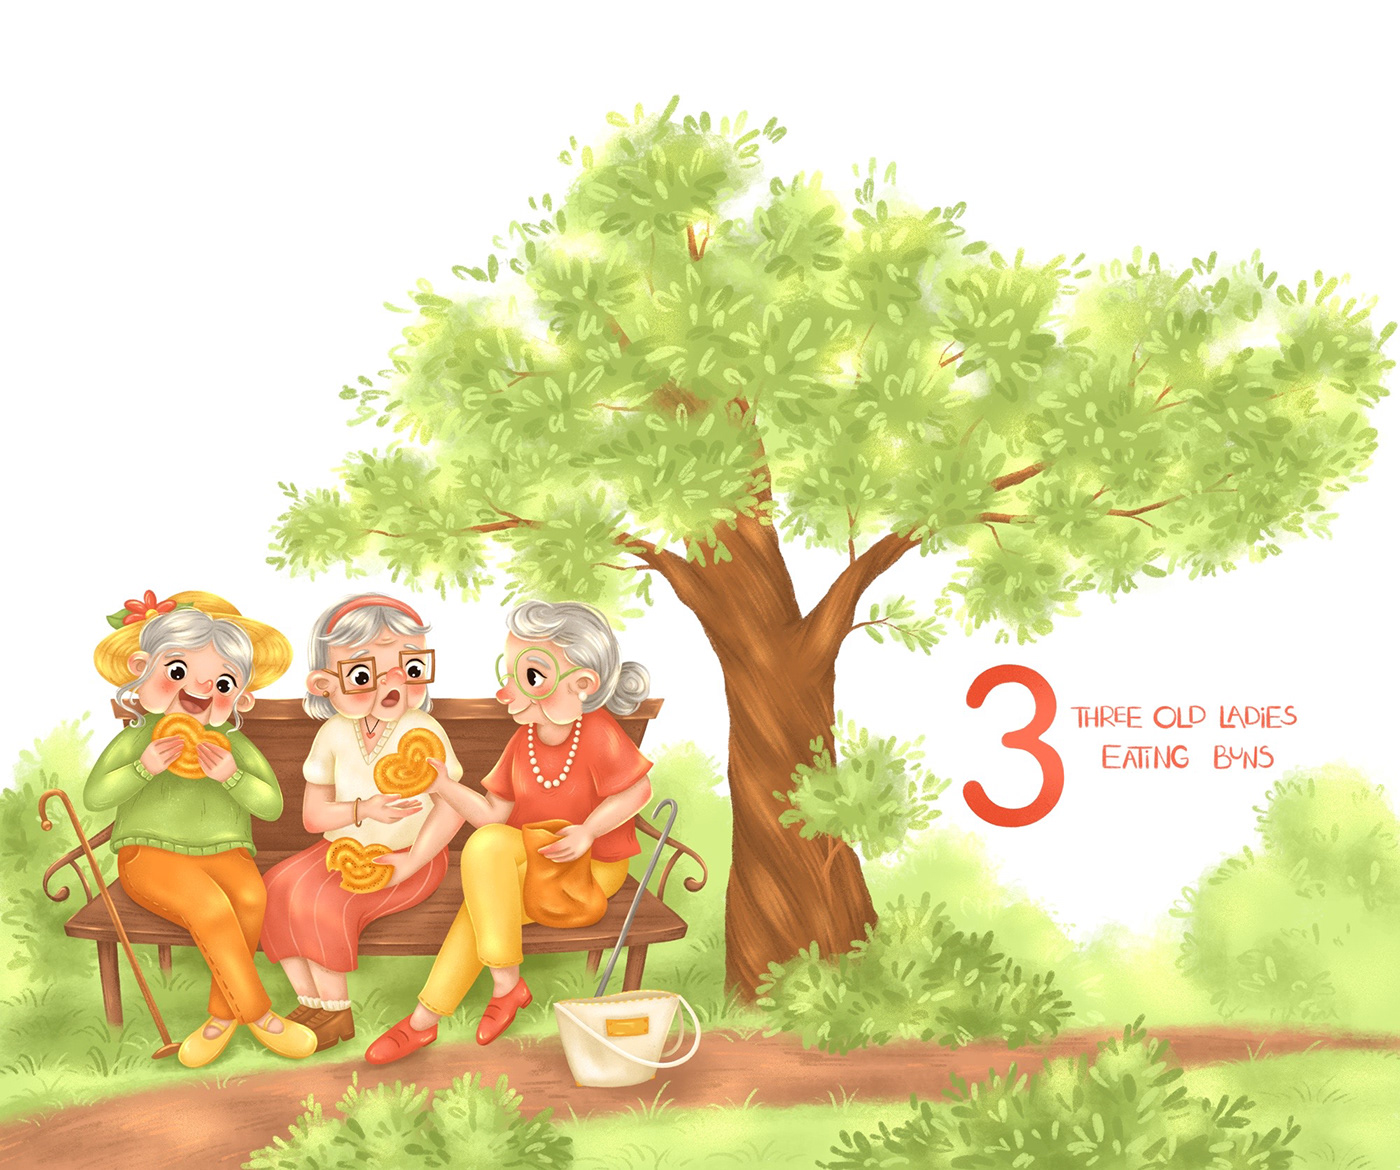 Children's book illustration. Three old ladies eating buns